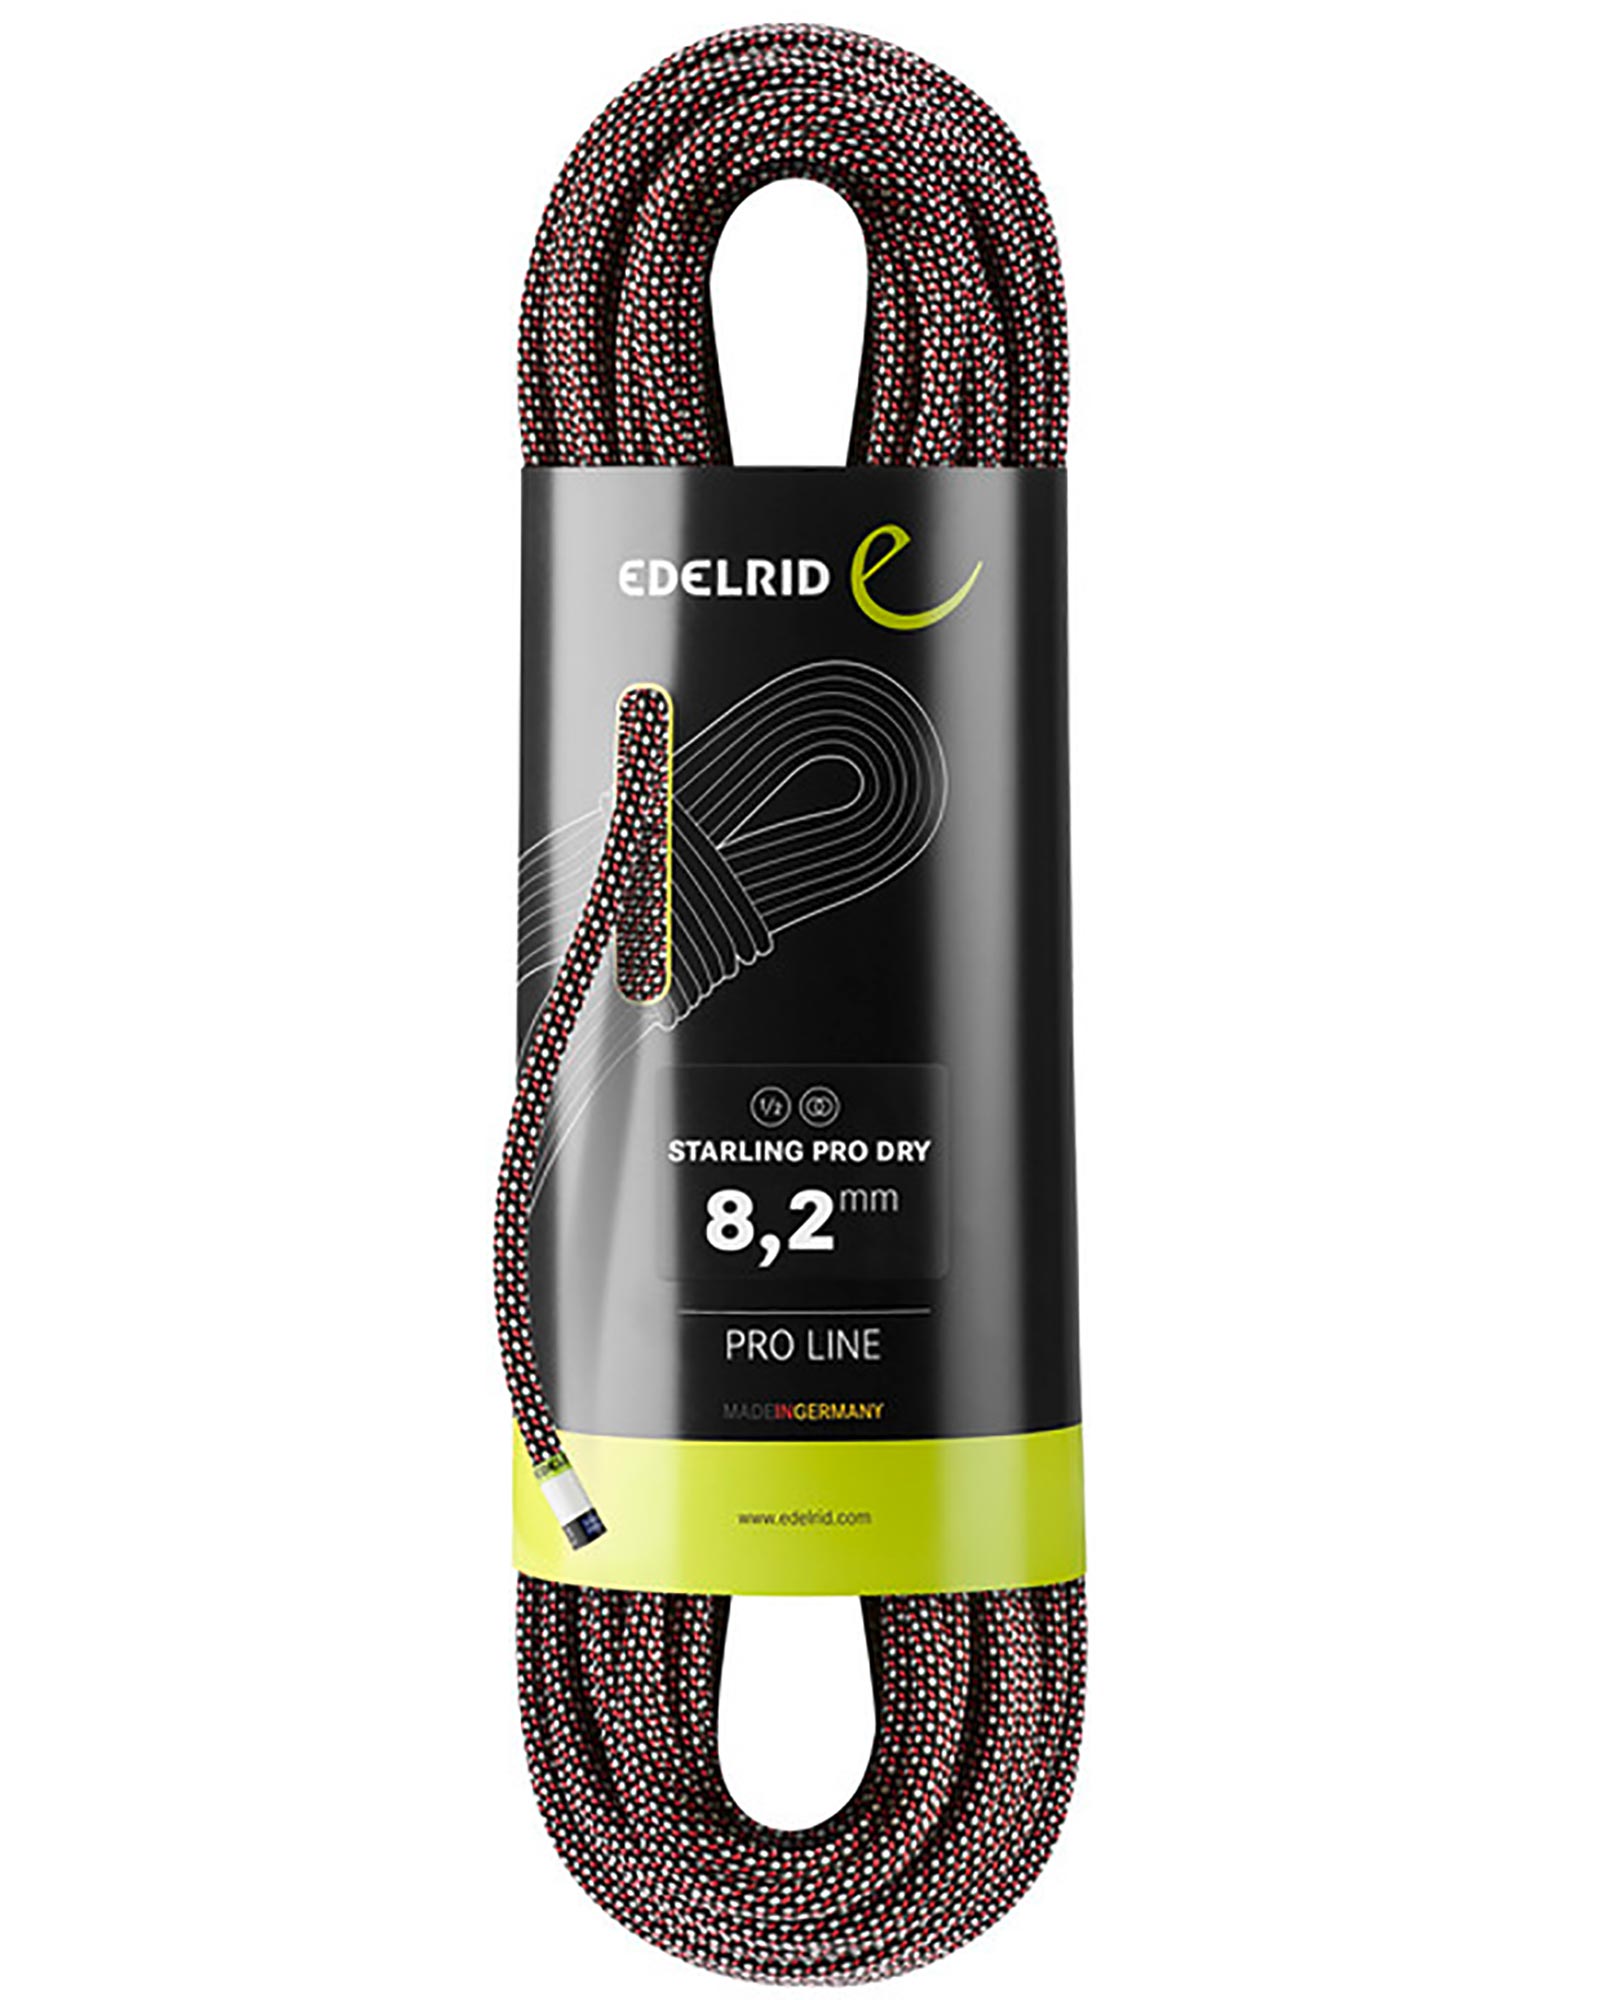 Edelrid Starling Pro Dry 8.2mm x 50m Rope - Night 50m